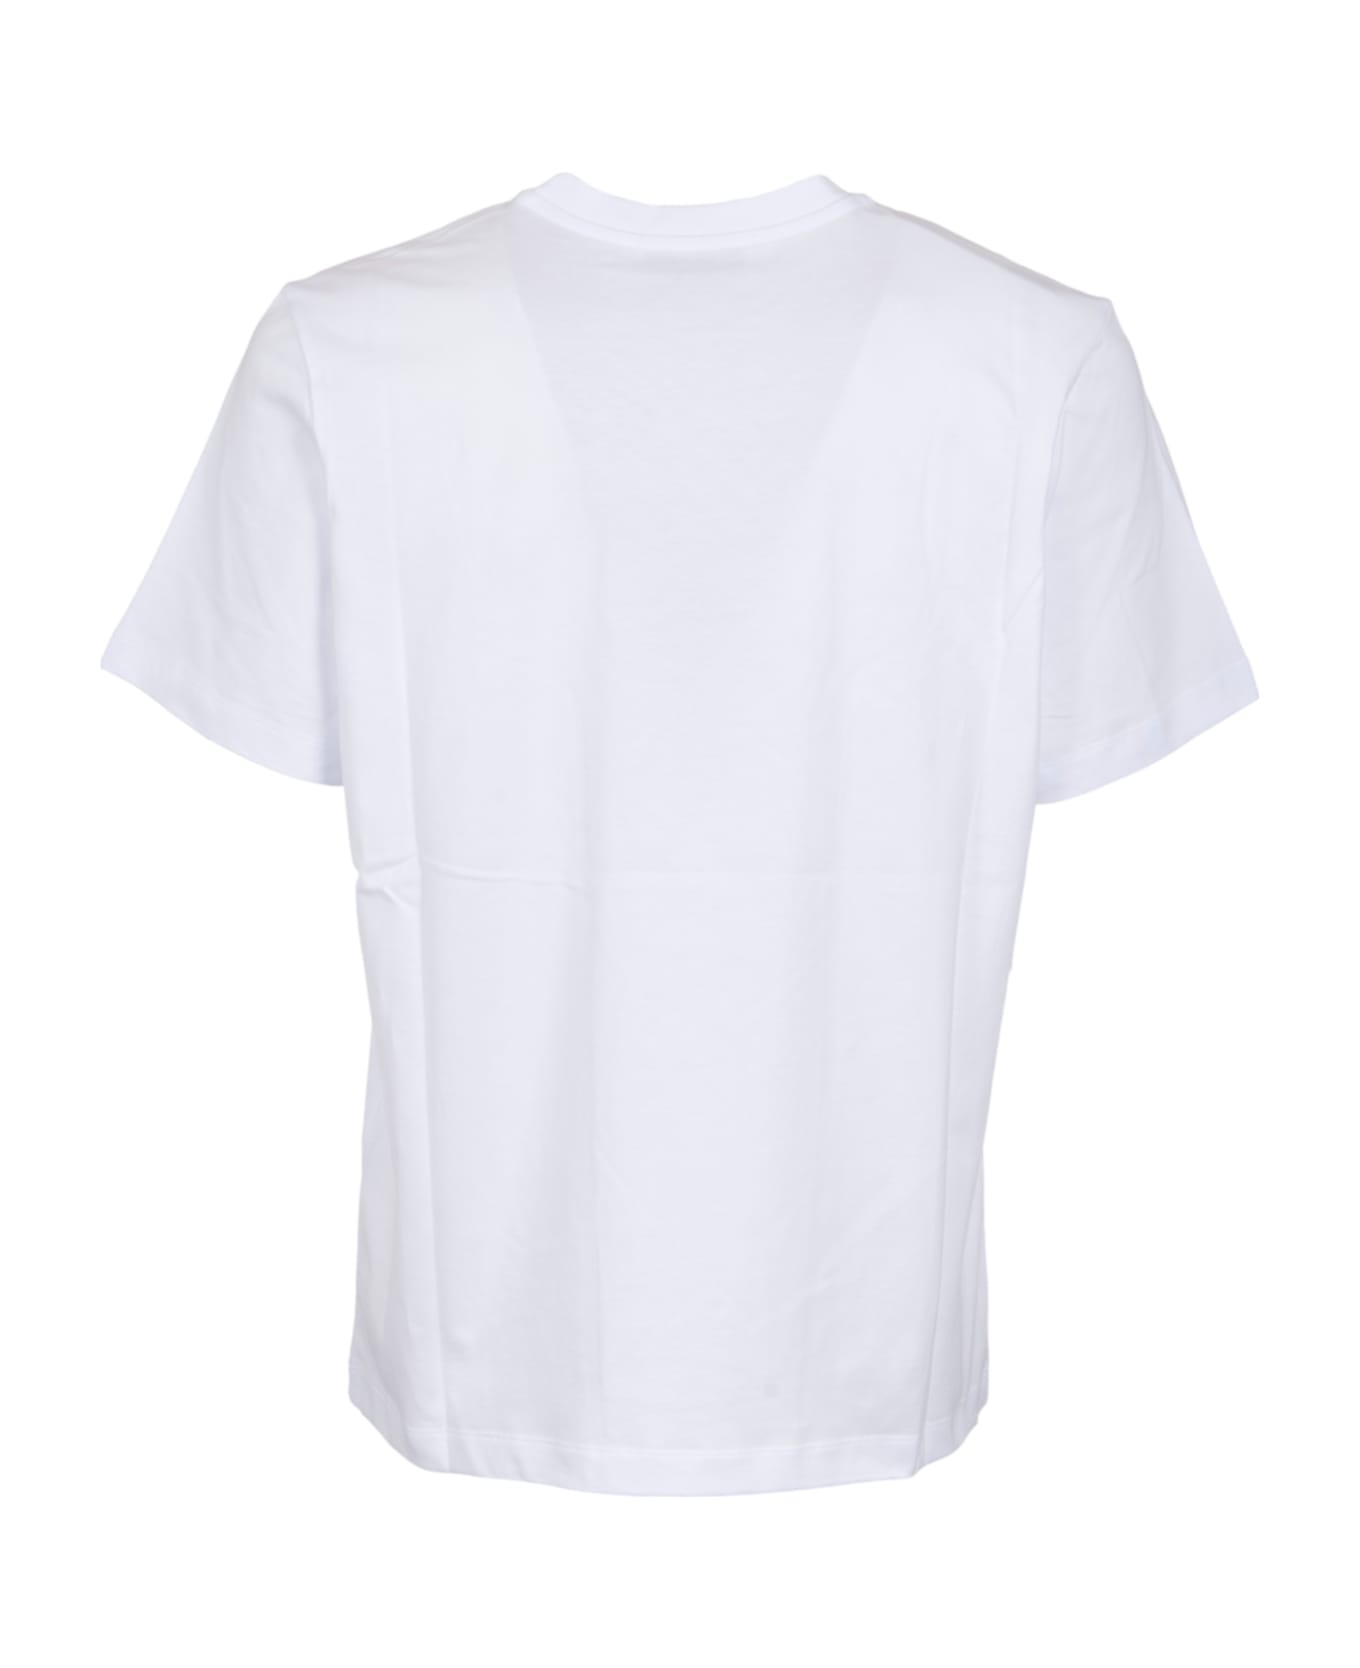 MSGM Logo Detail Round Neck T-shirt - Optical White シャツ